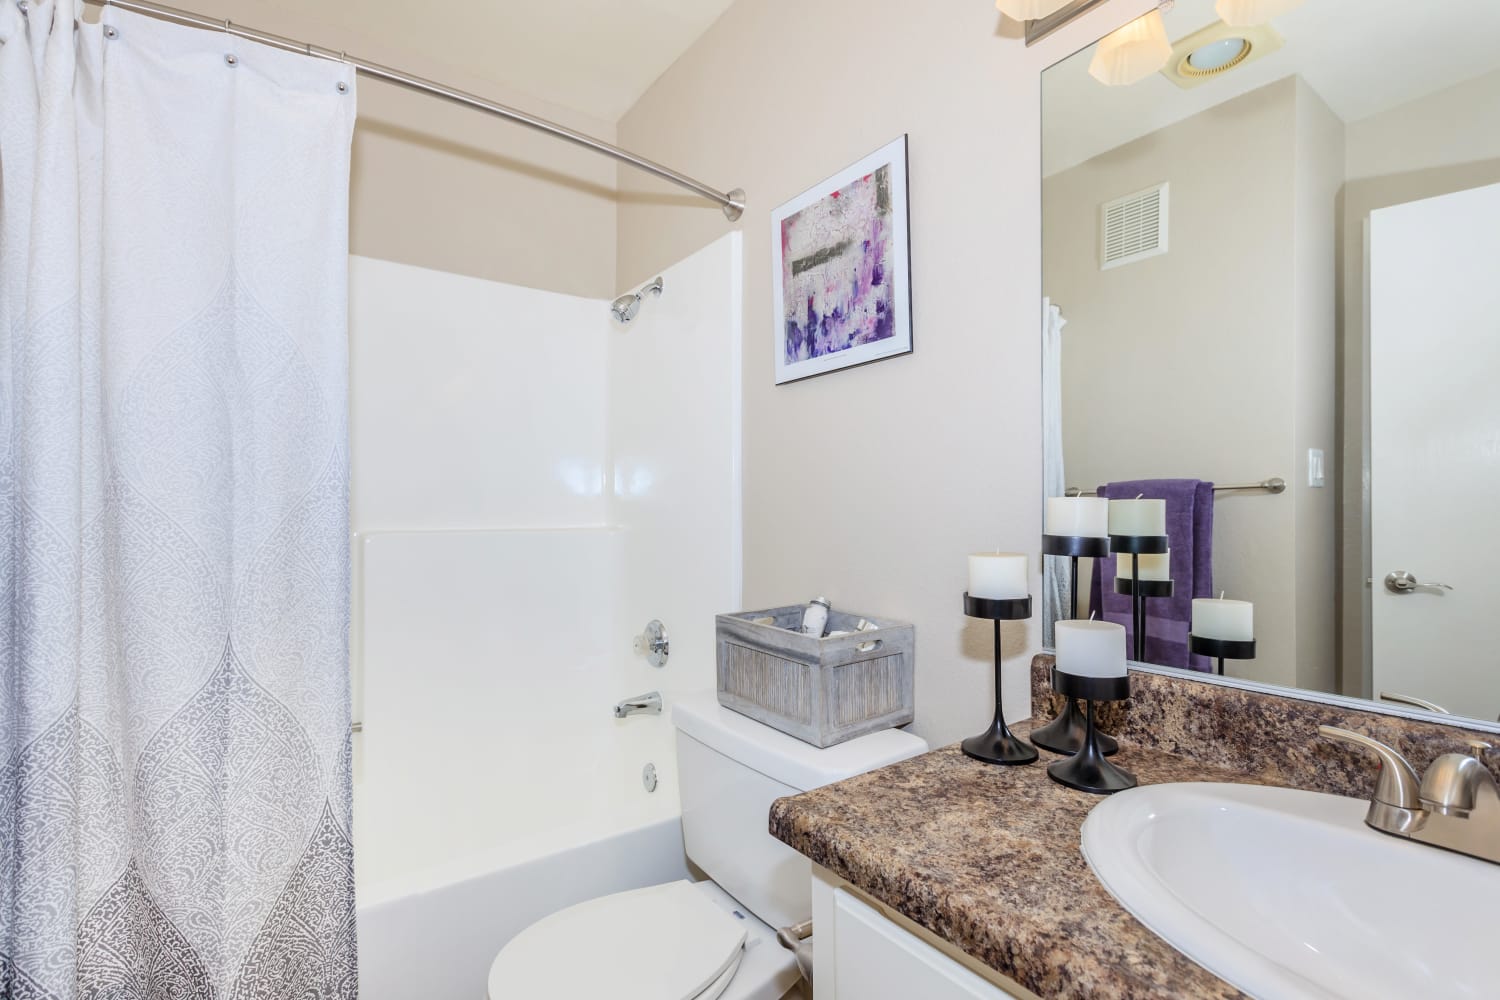 Updated bathrooms at Parcwood Apartments in Corona, California